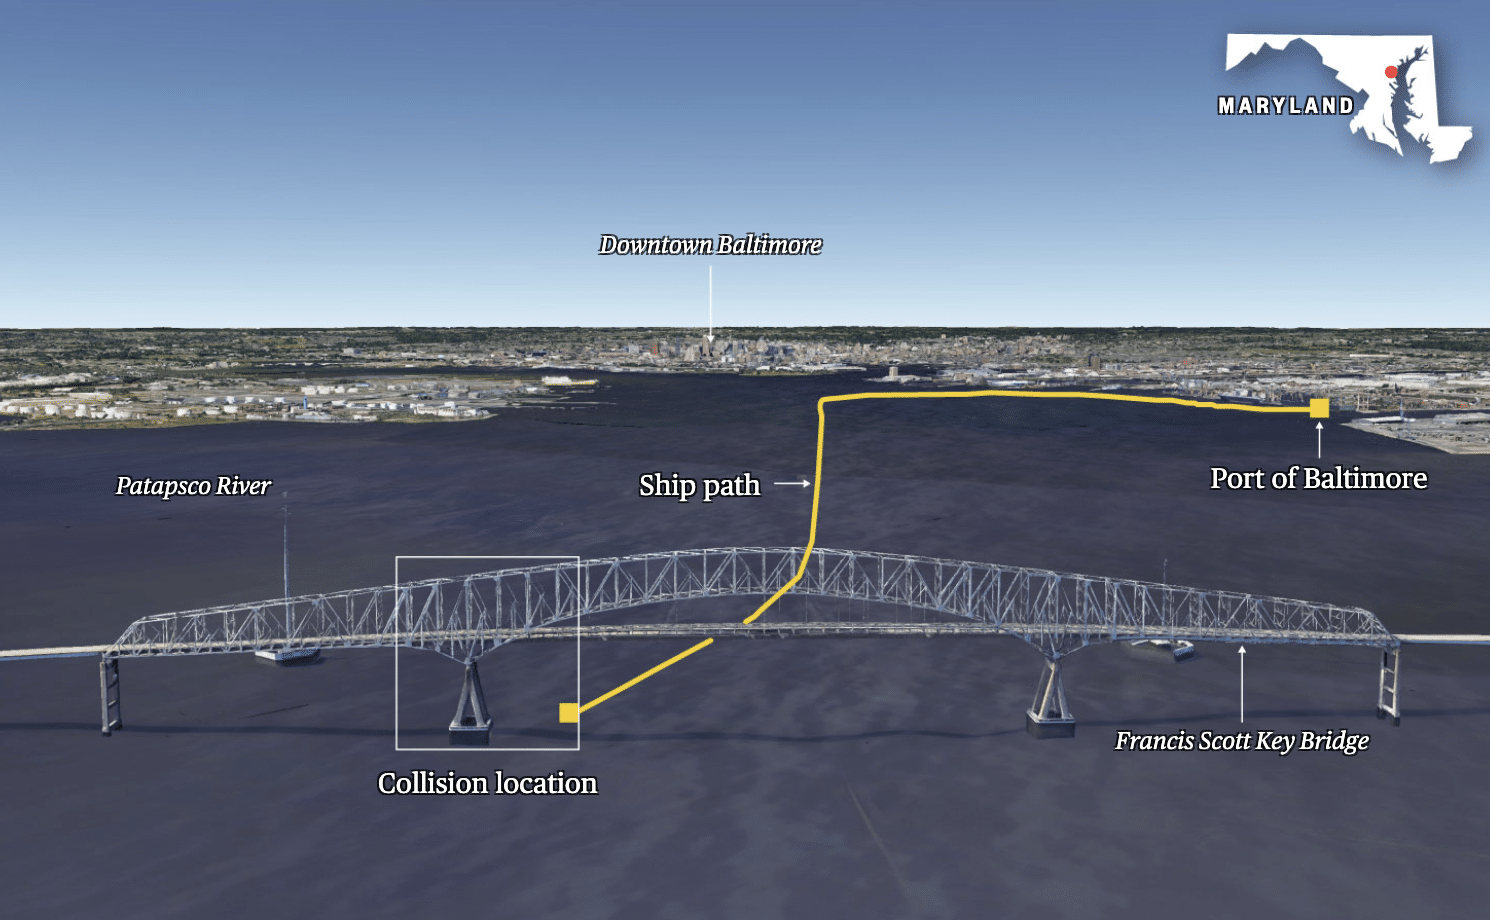 Ship path of Key bridge collision.